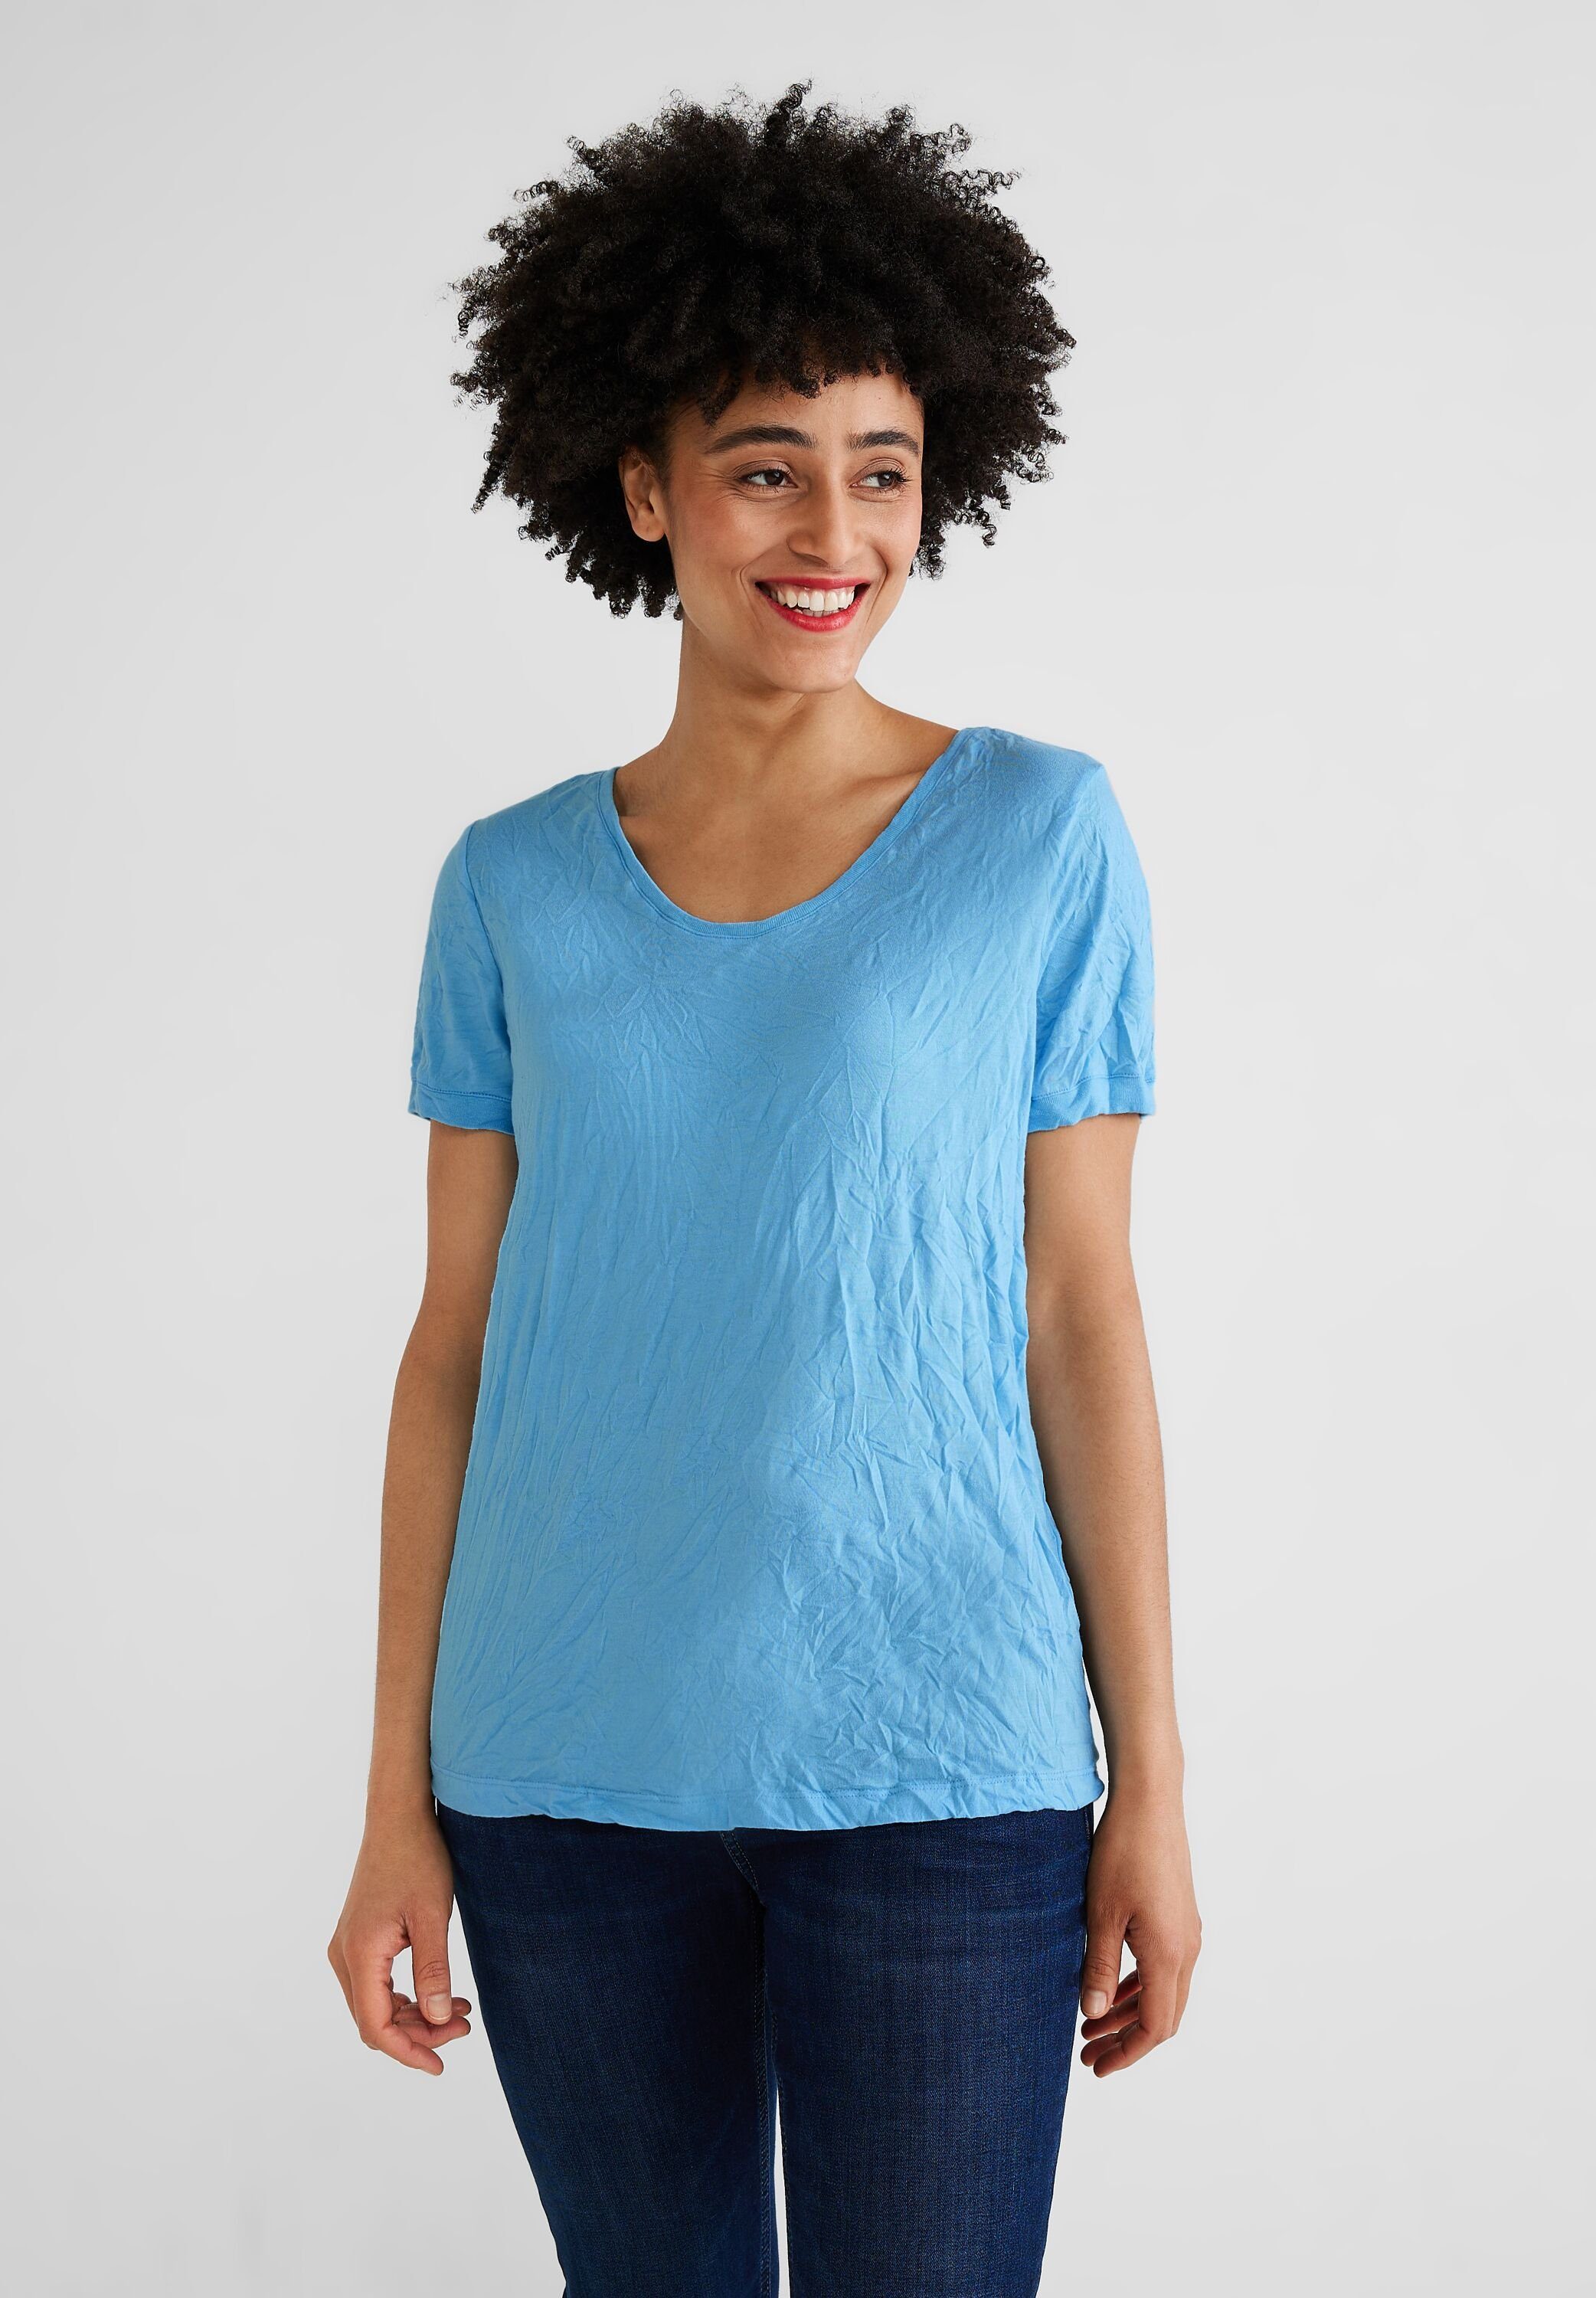 splash Materialmix softem ONE T-Shirt STREET aus blue